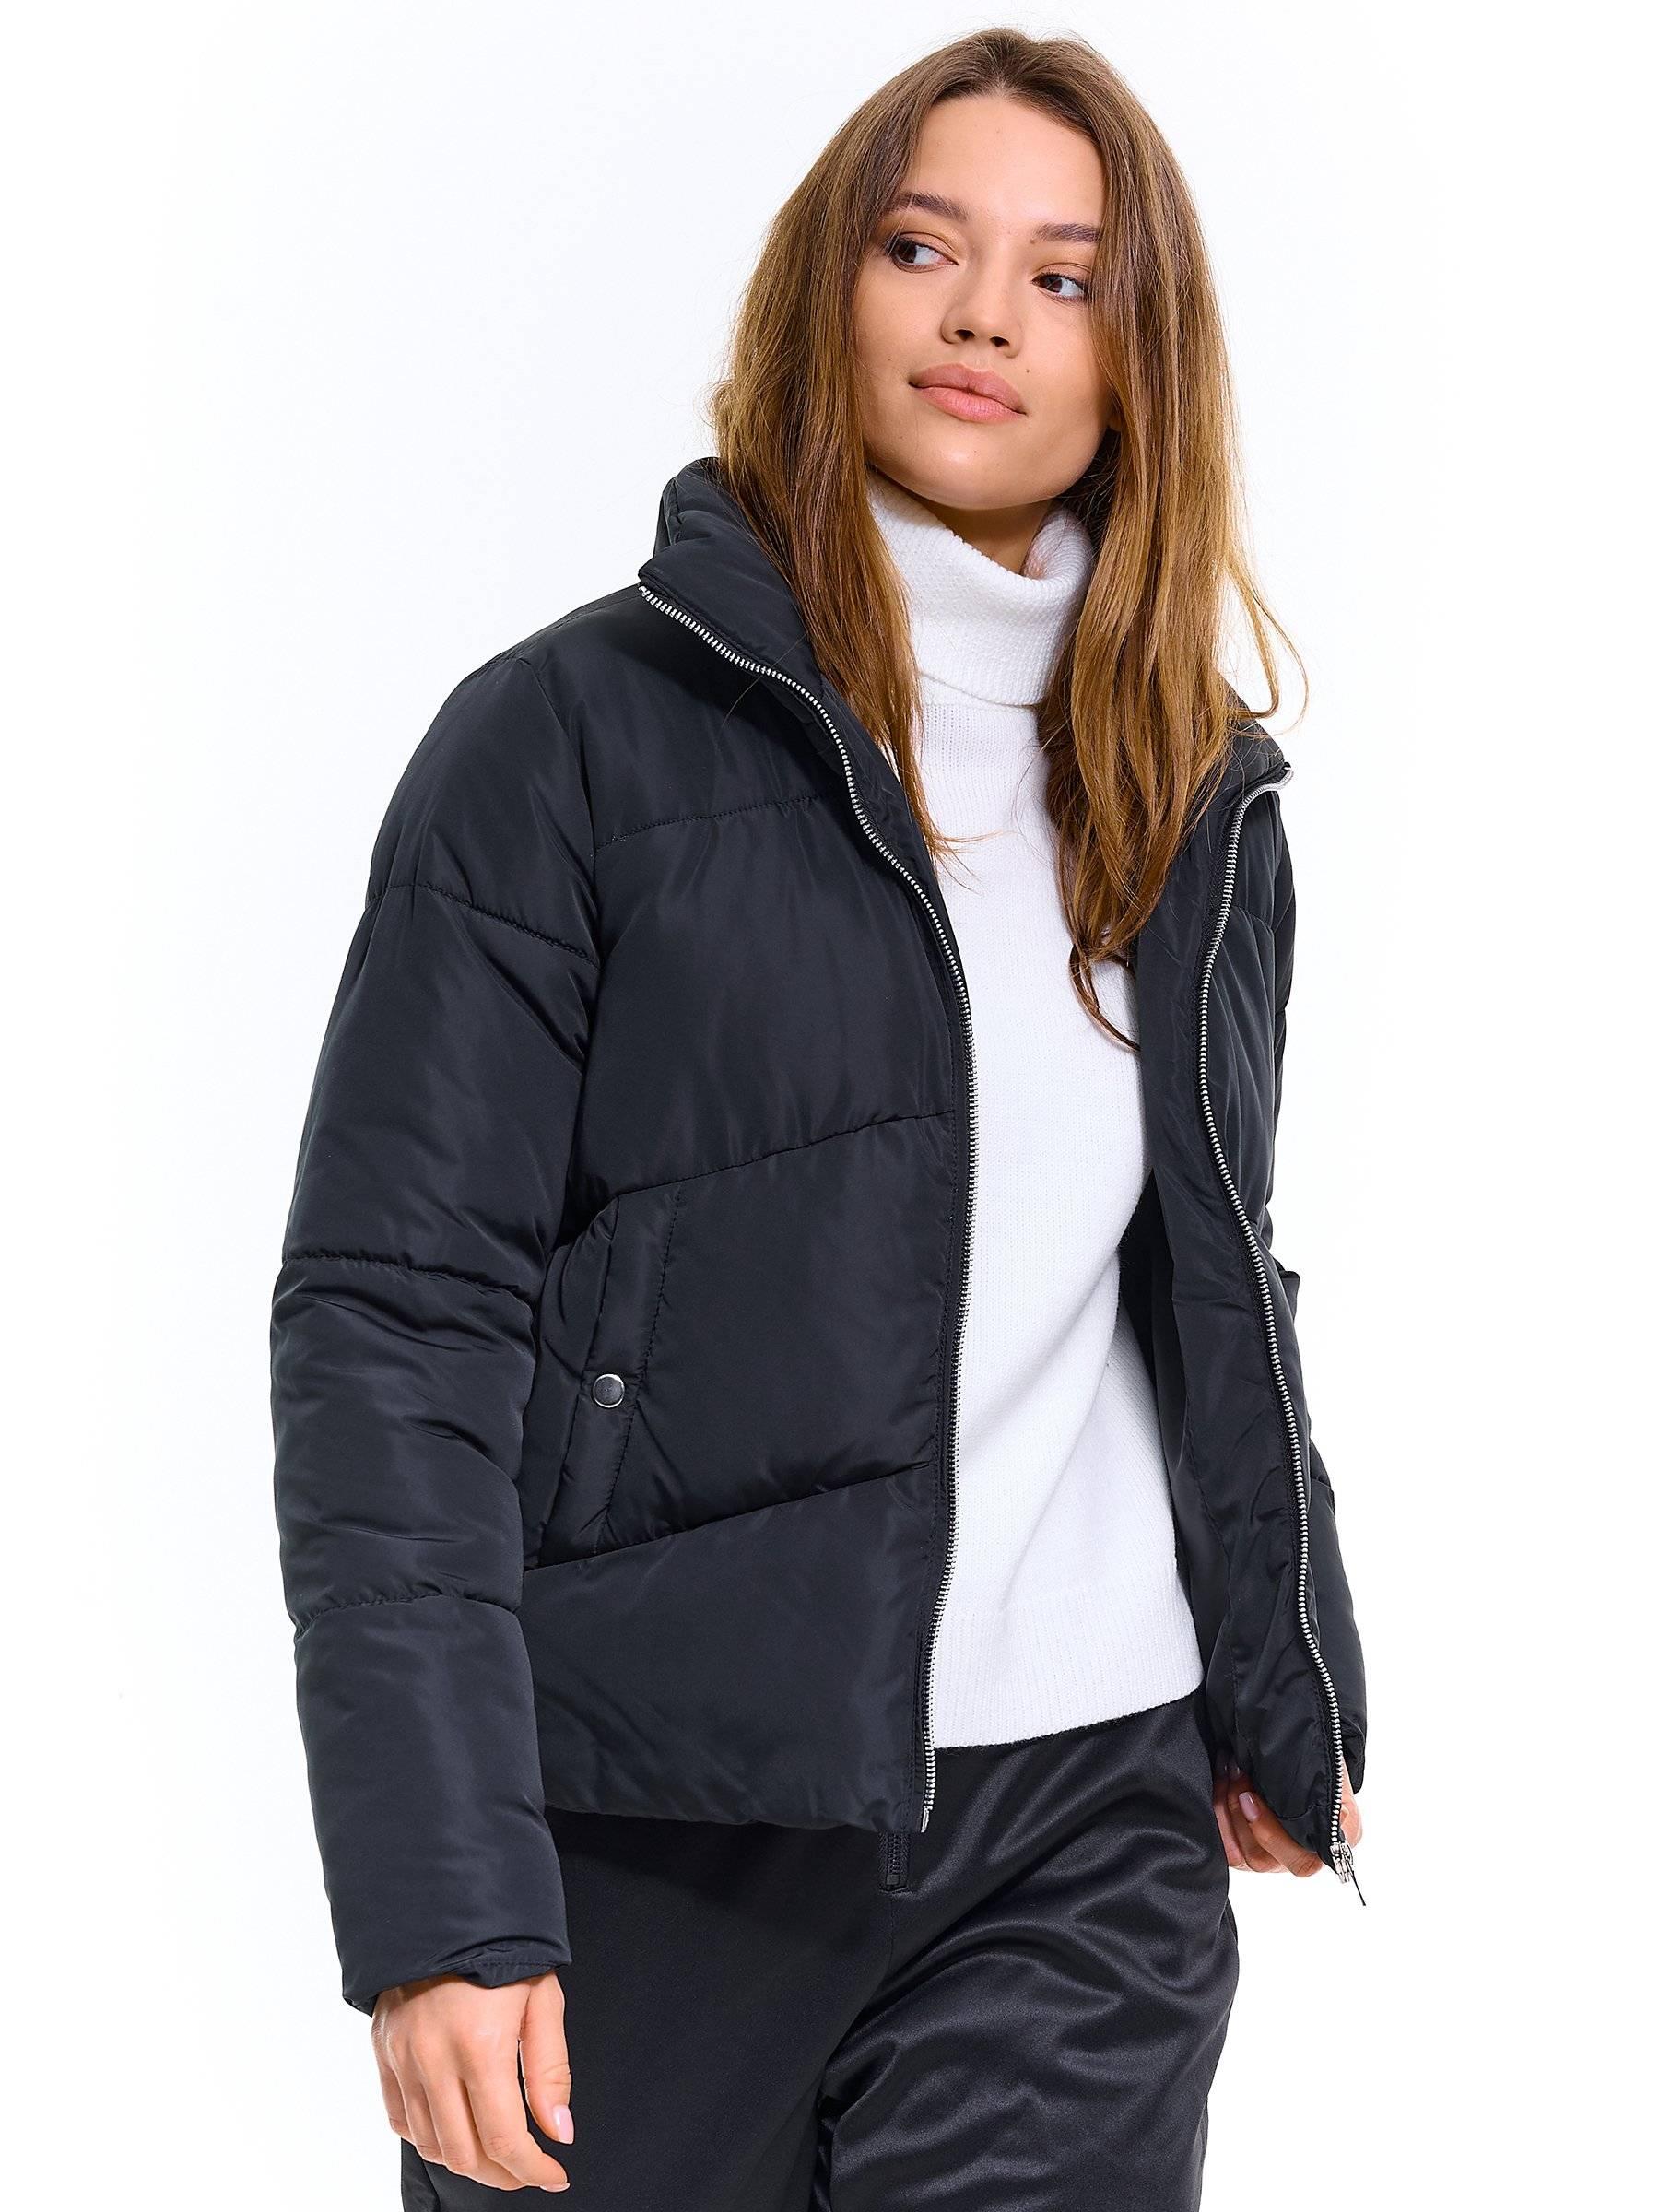 Outerwear | Womens GATE Winter jacket ladies Black